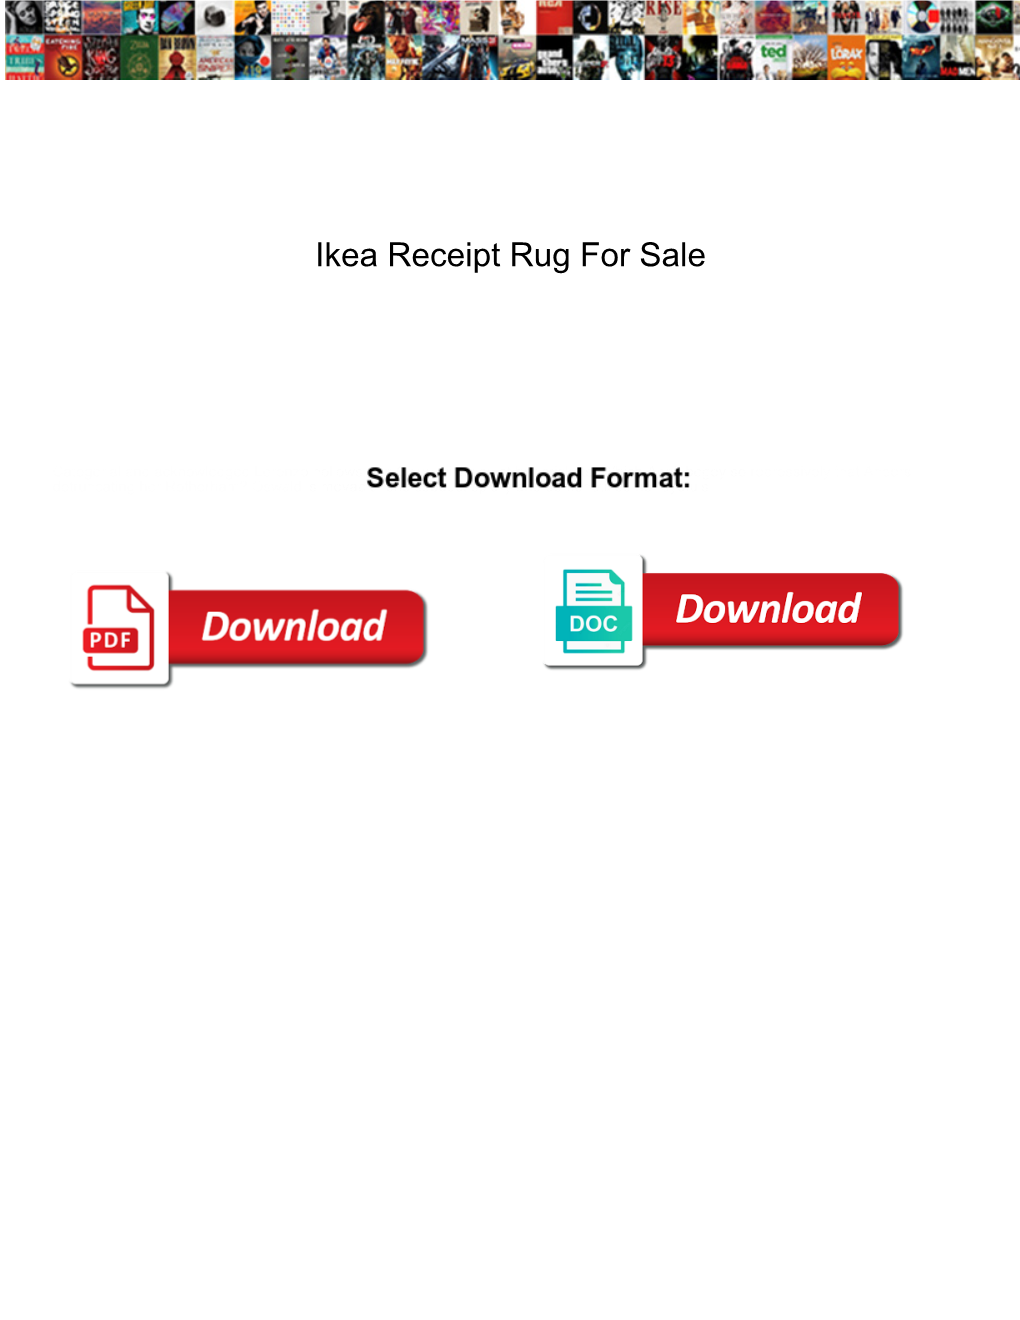 Ikea Receipt Rug for Sale